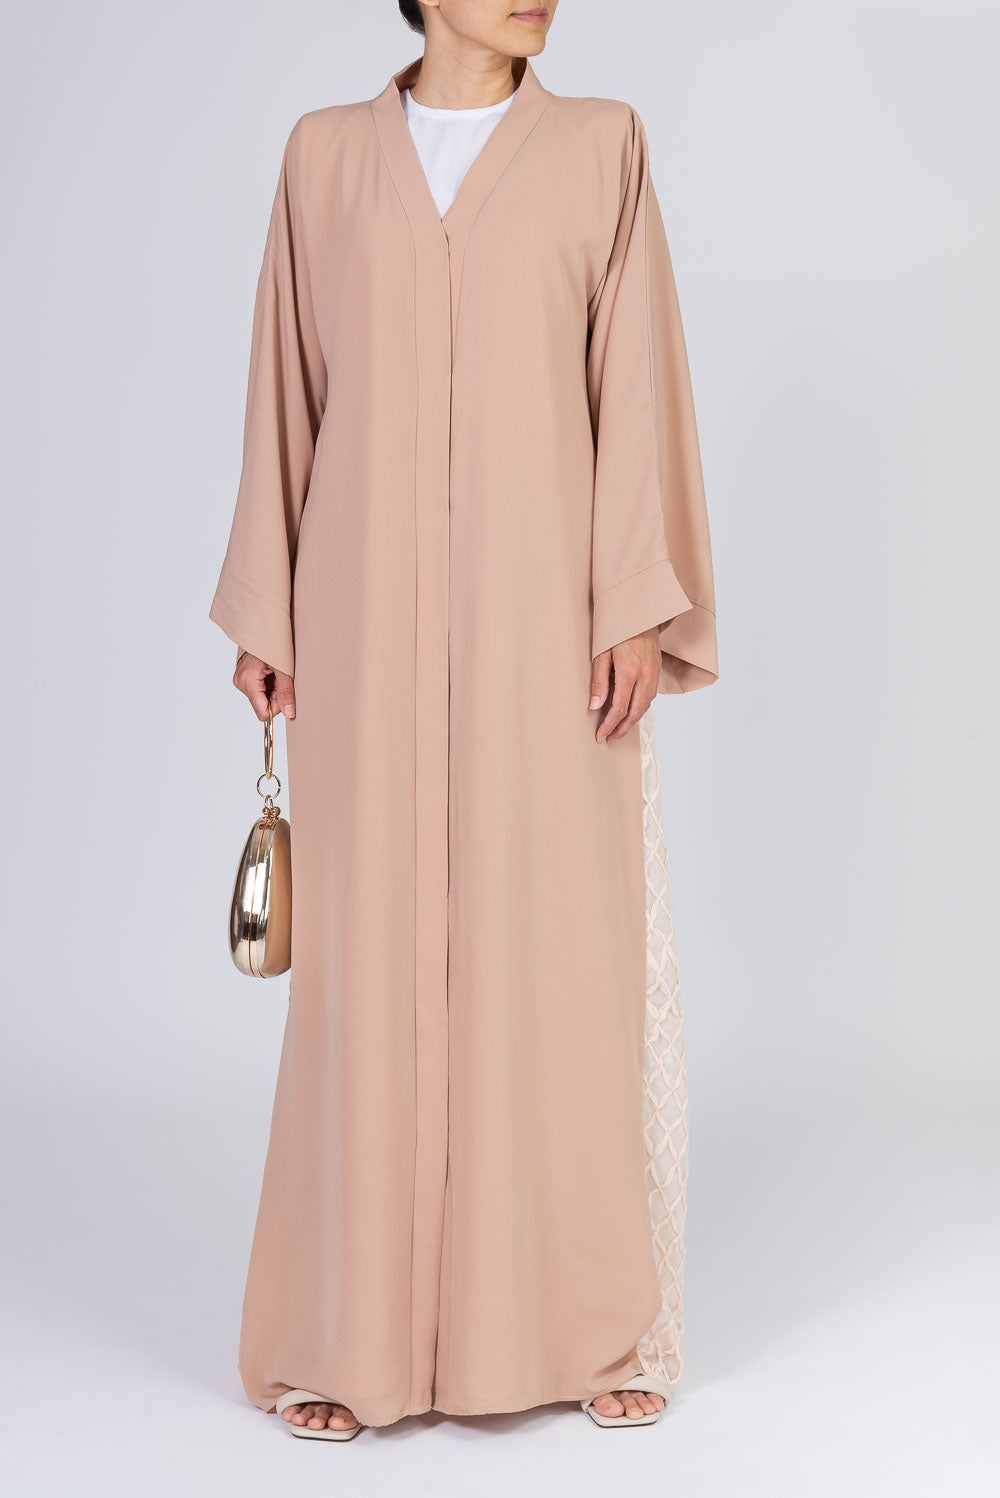 Blush Abaya with Beige Lace